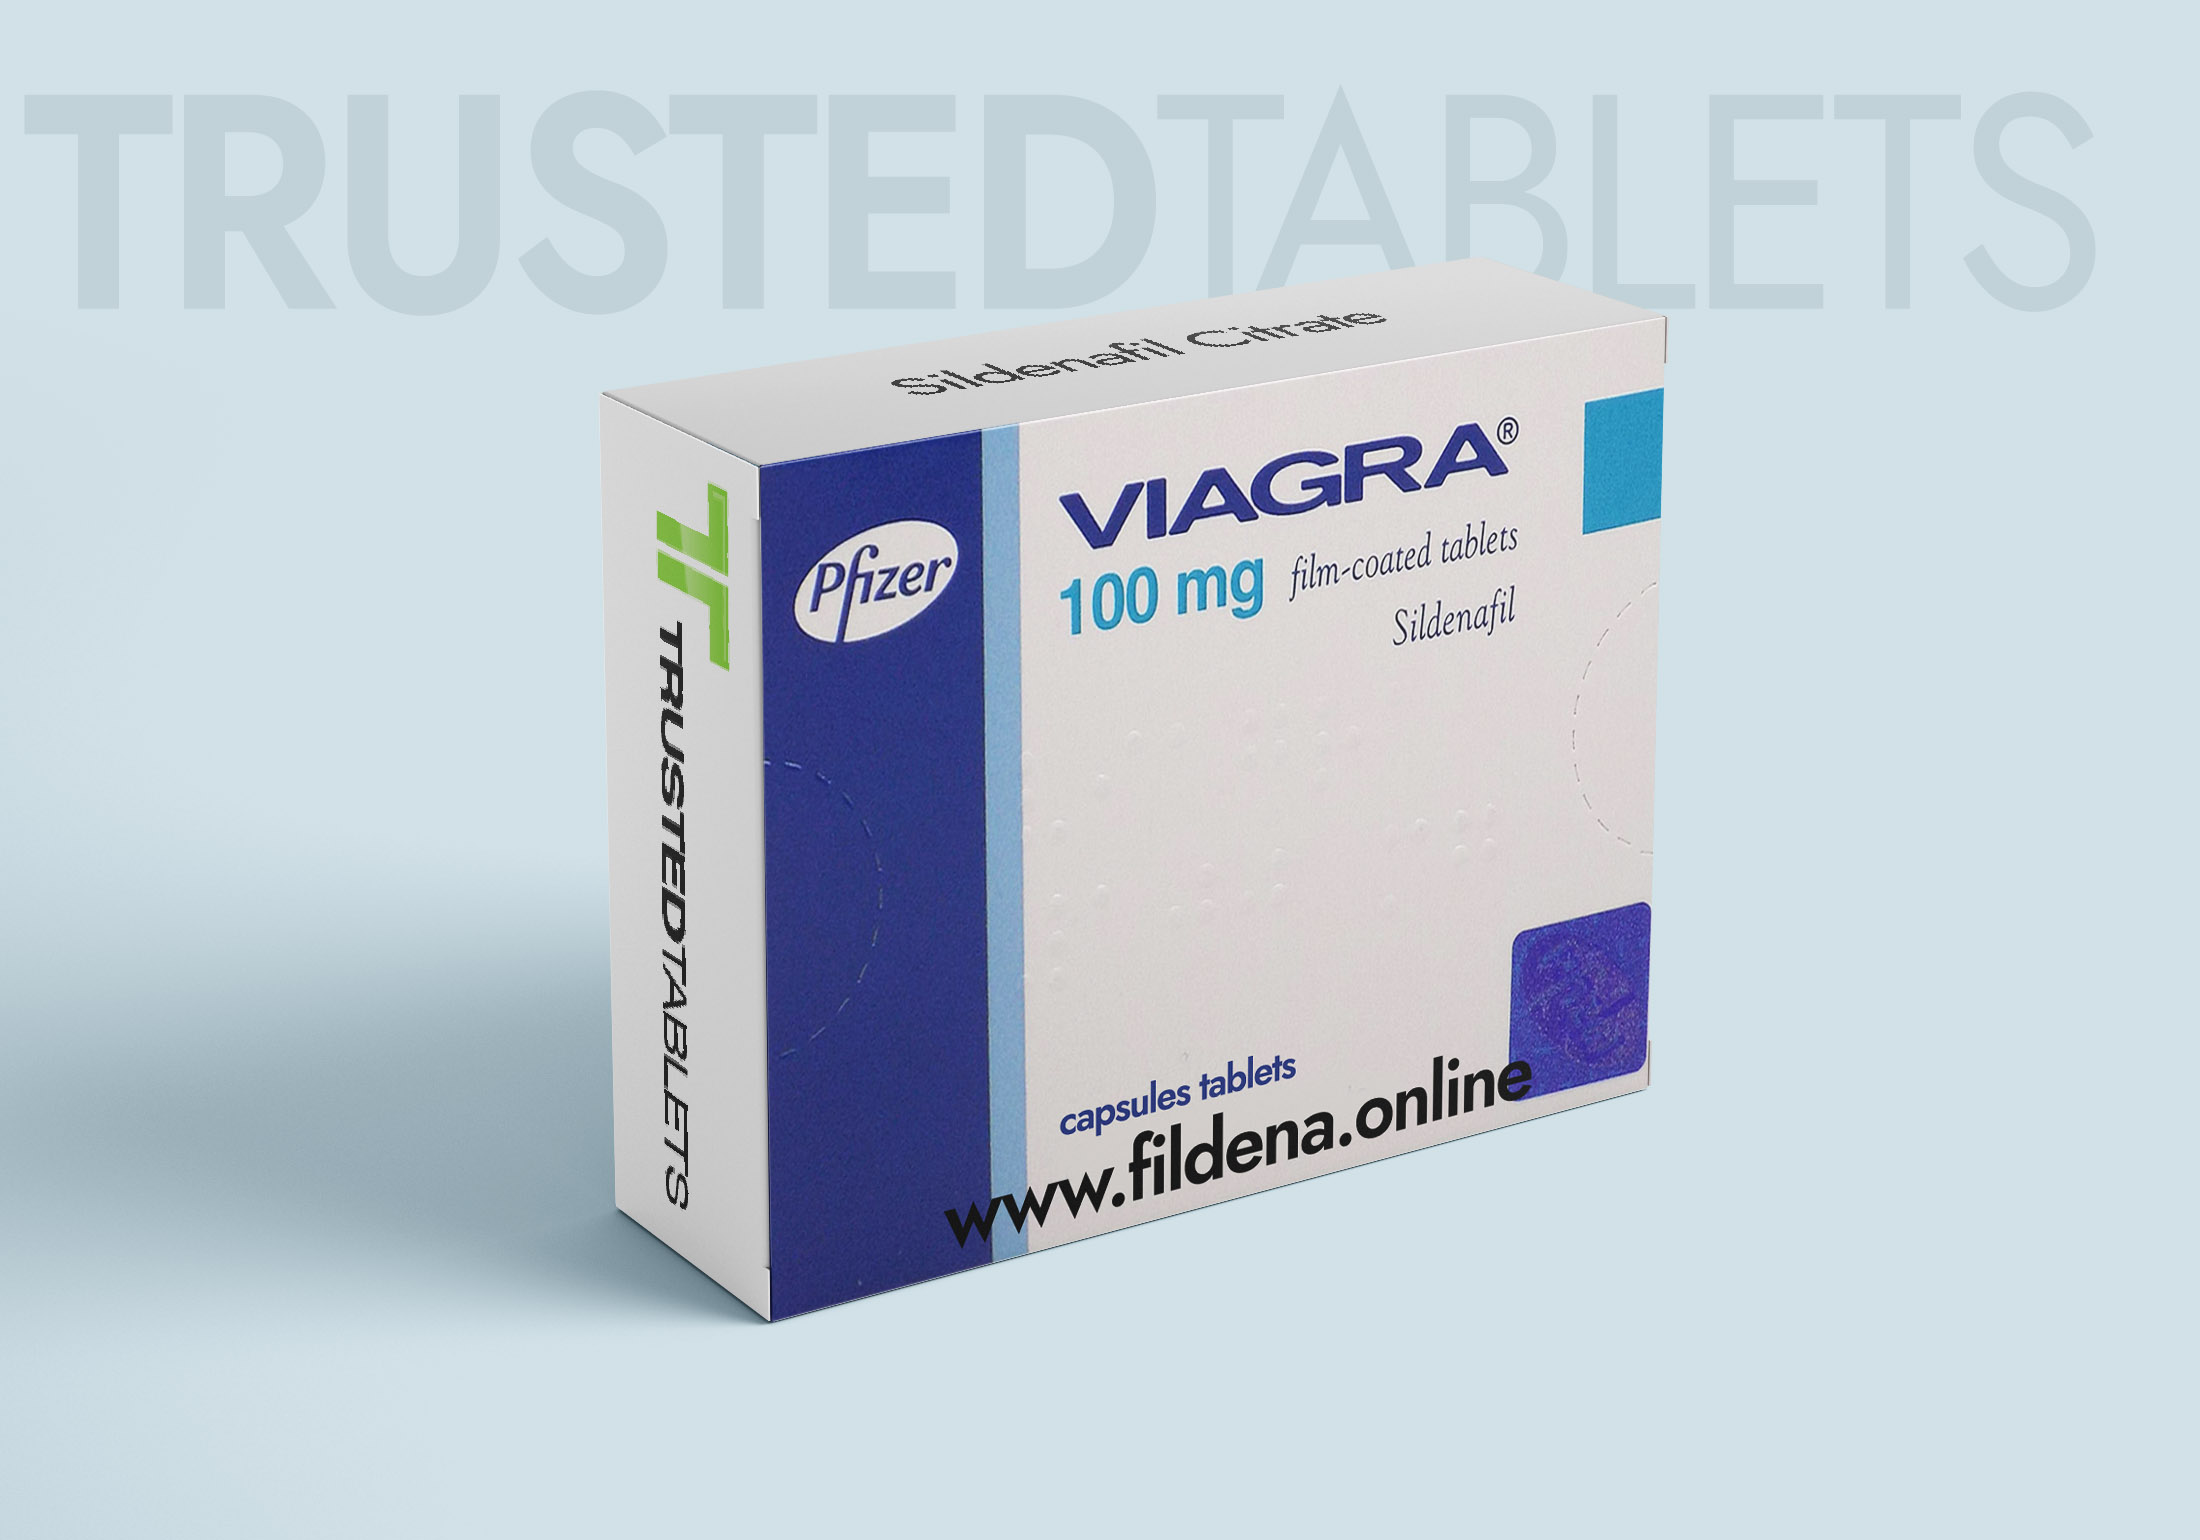 Viagra Capsules  TrustedTablets